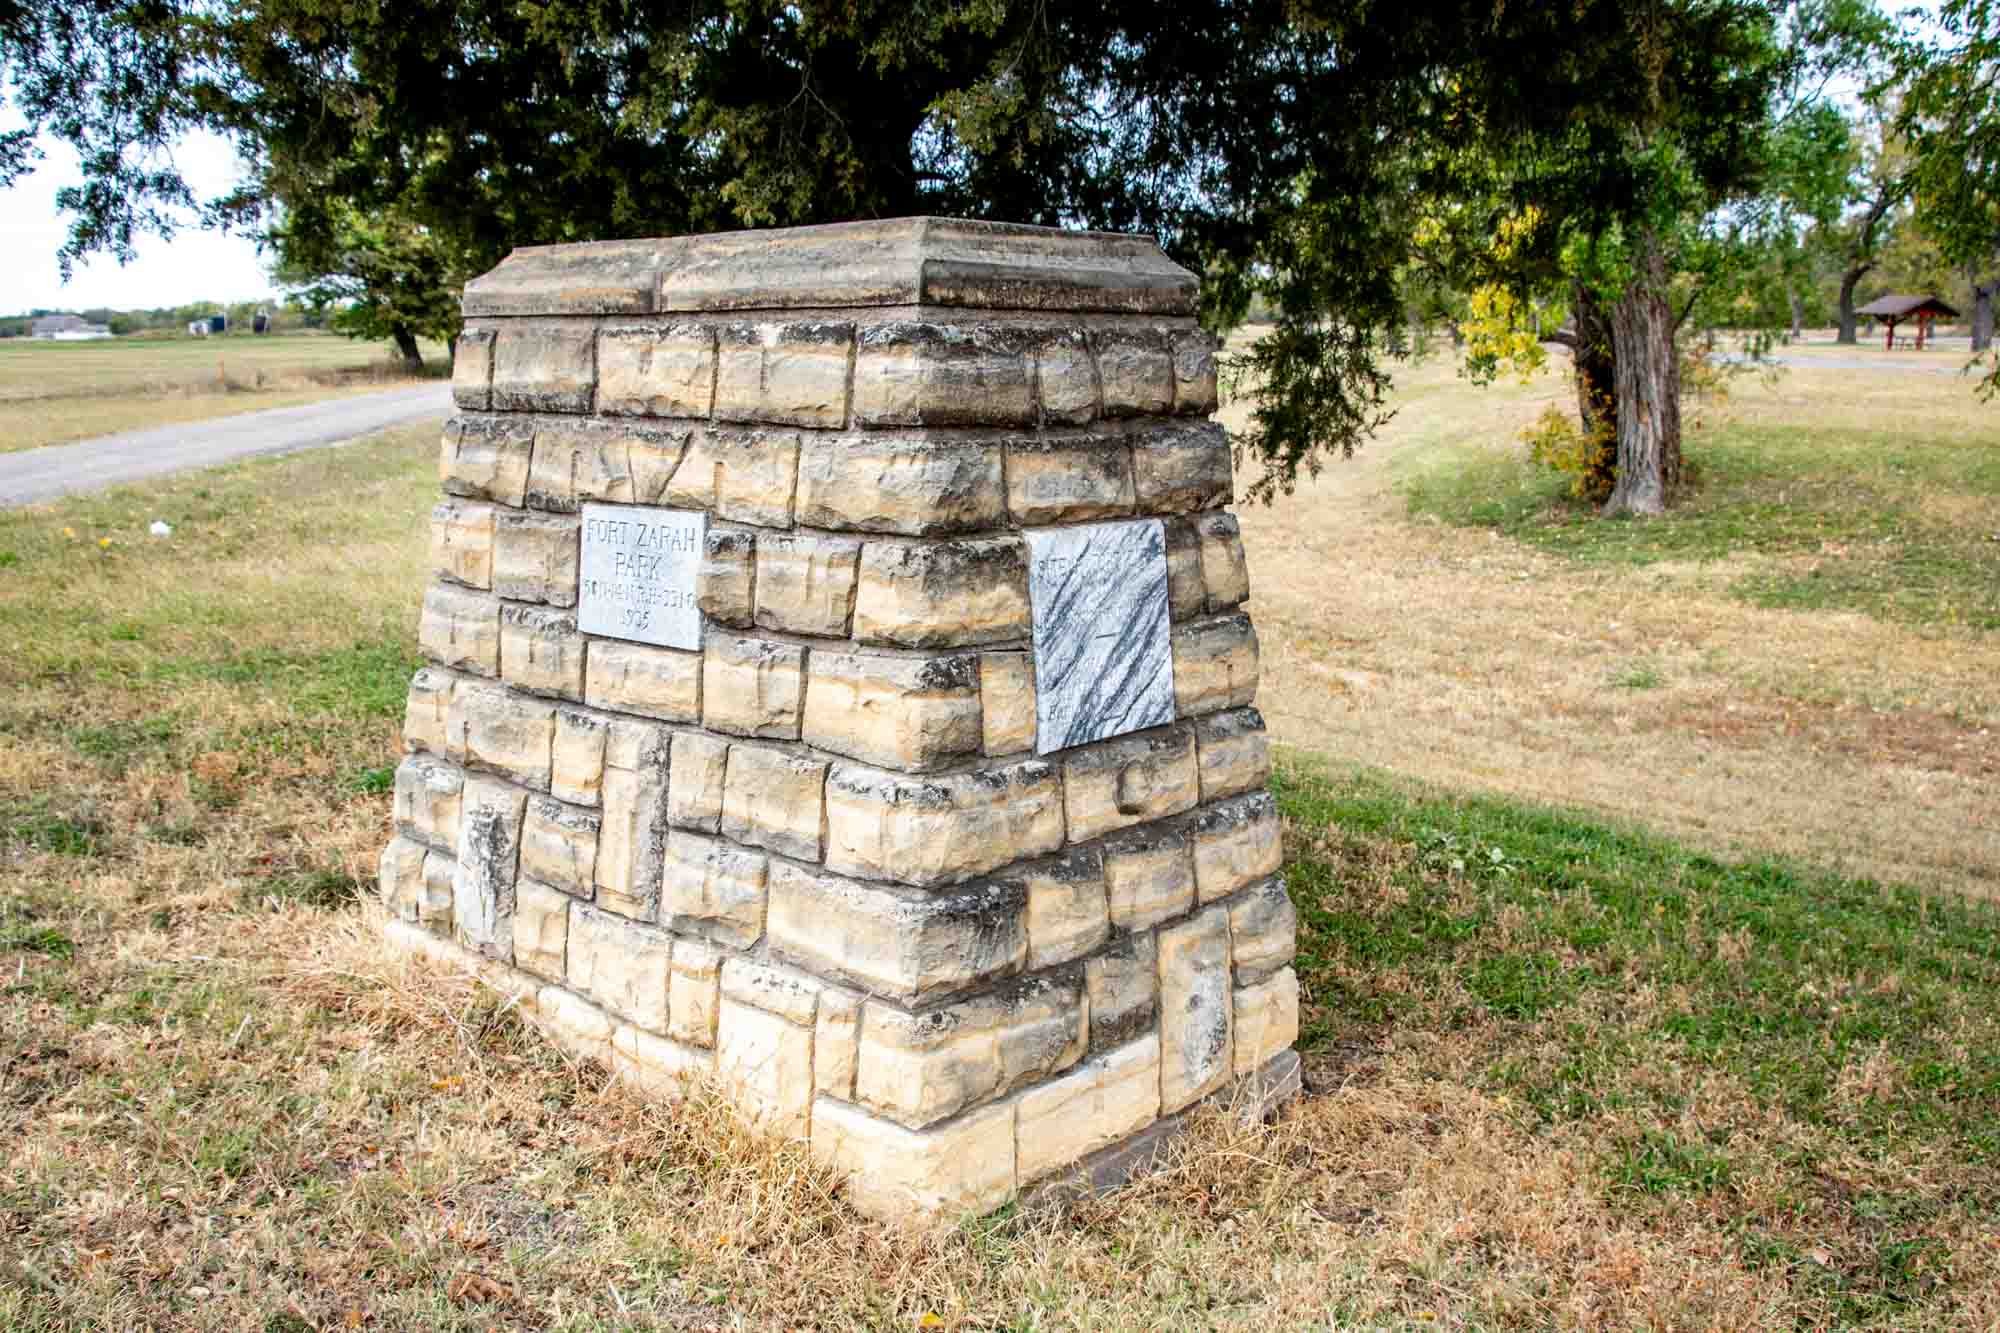 Yellow stone historical marker reading "Fort Zarah Park"